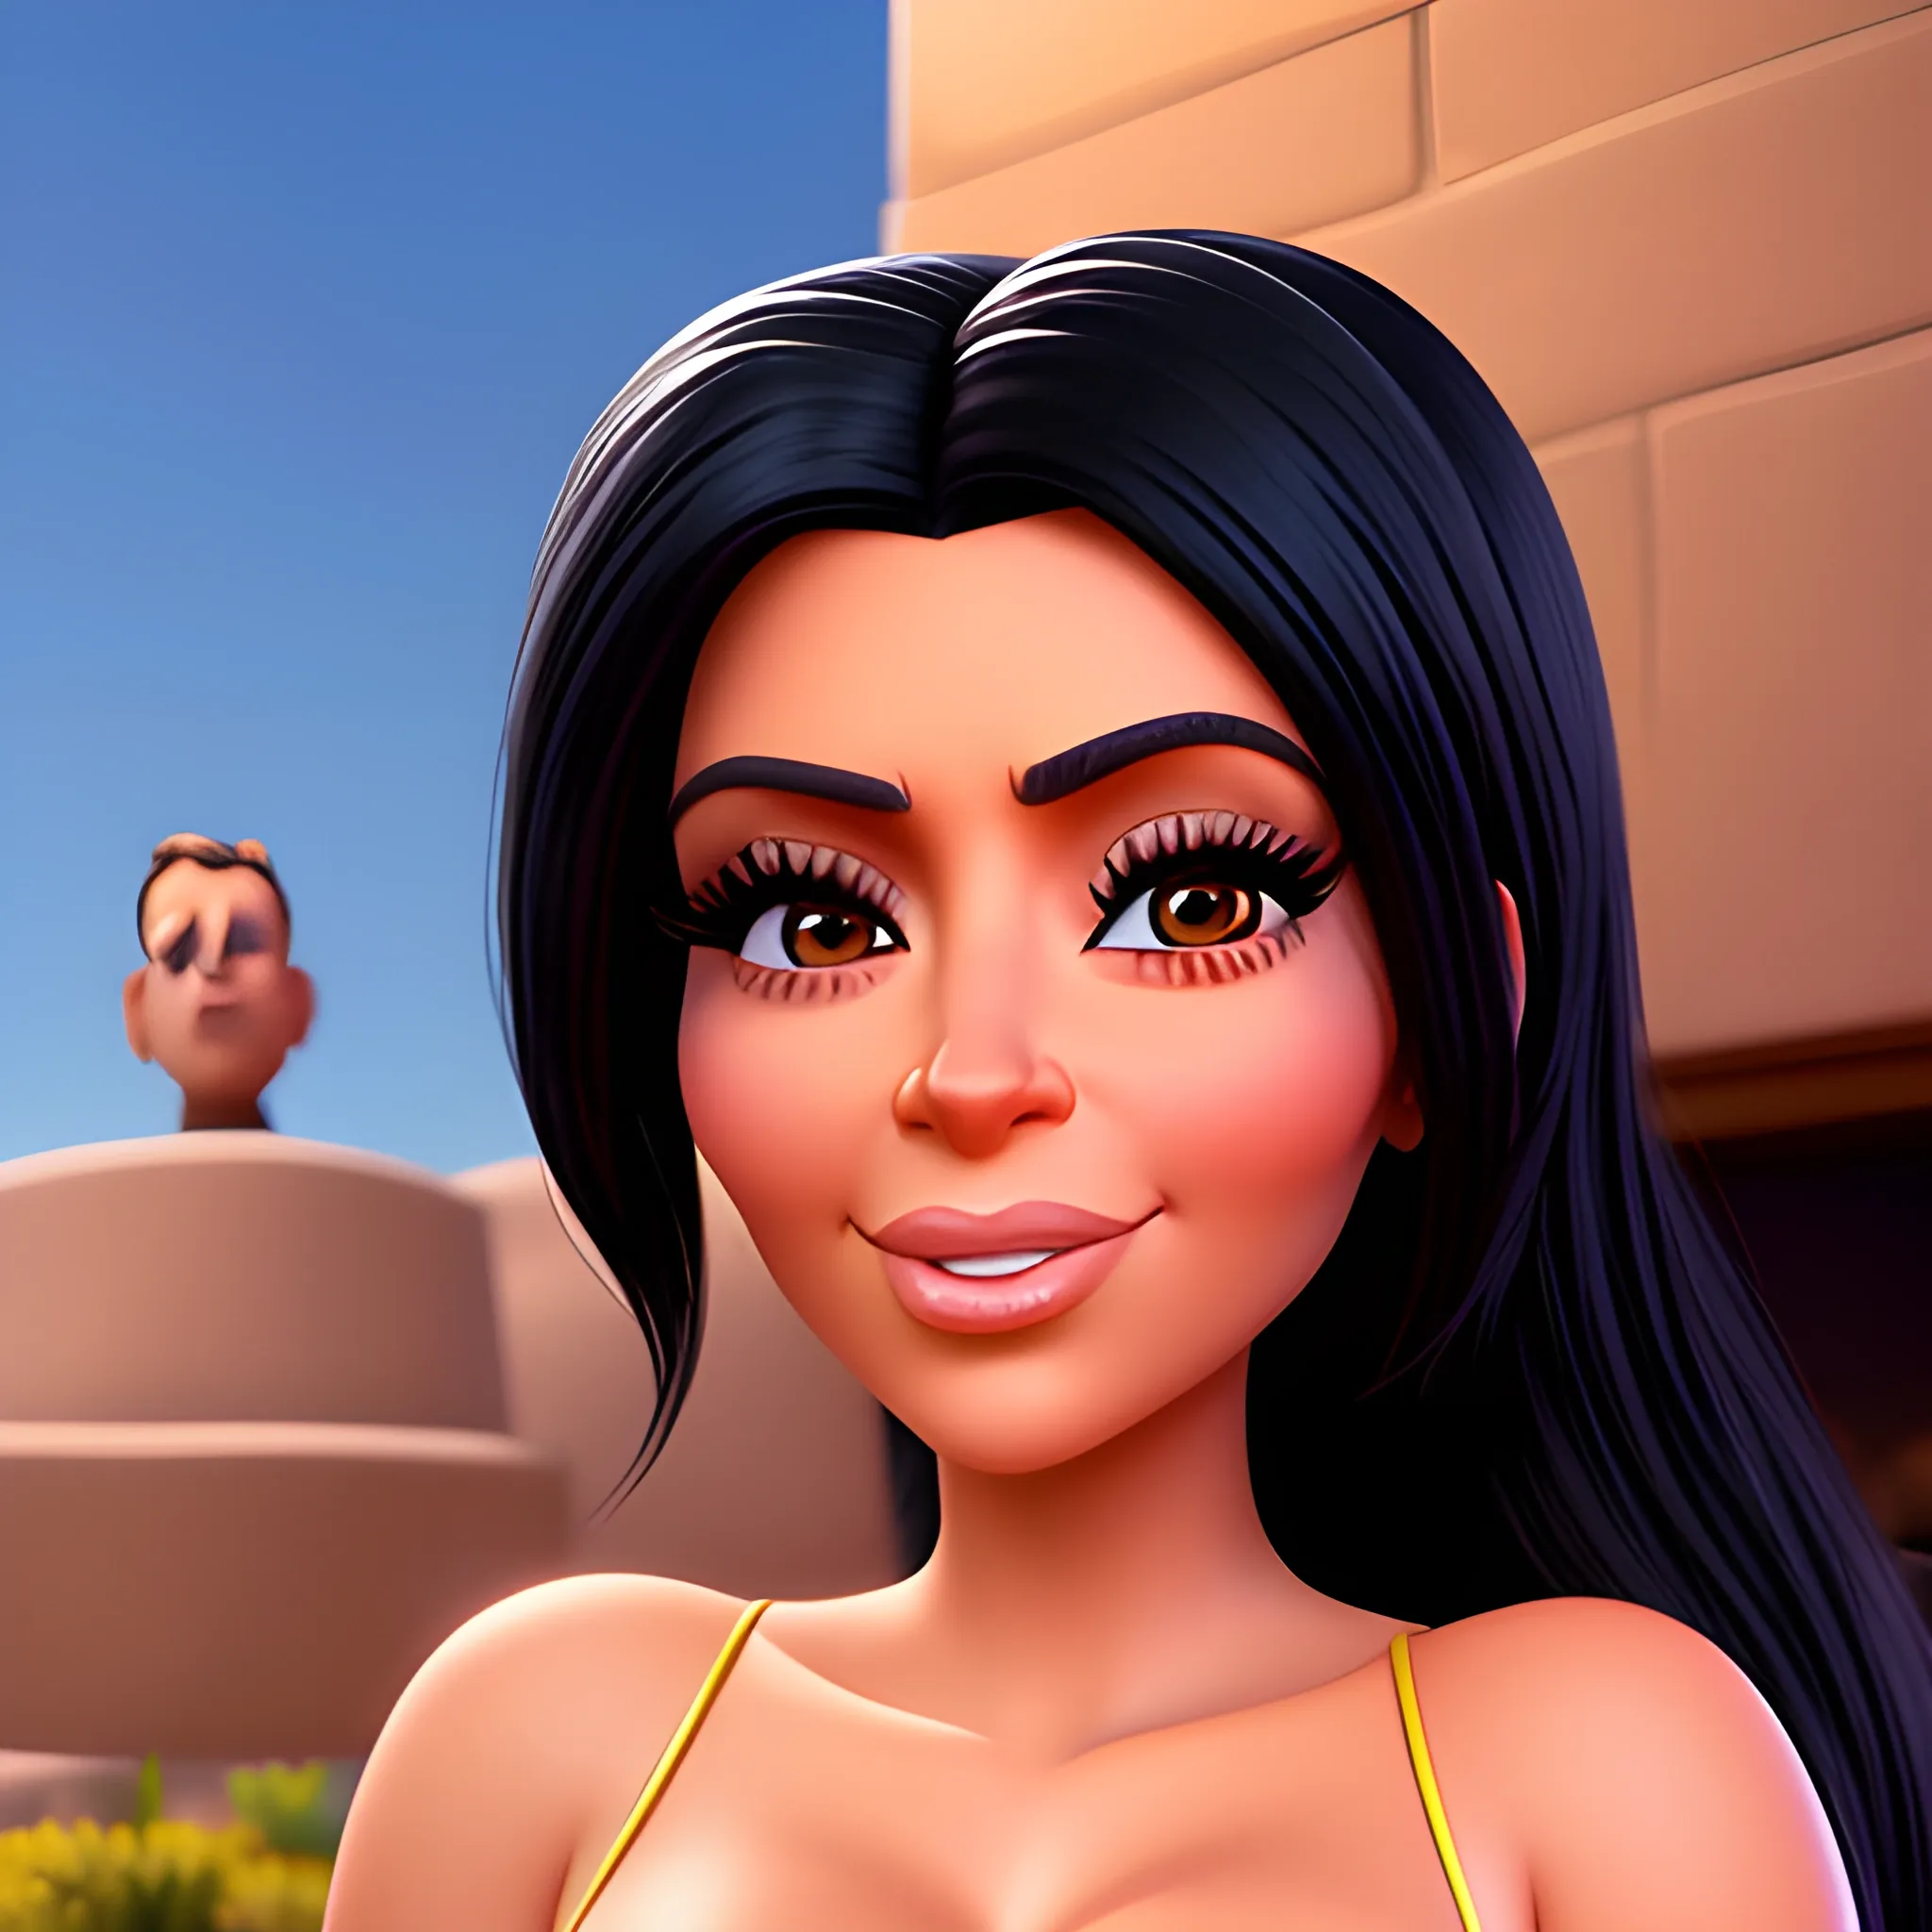 screenshot of kim kardashian in a pixar movie. 3 d rendering. unreal engine. amazing likeness. very detailed. cartoon caricature.